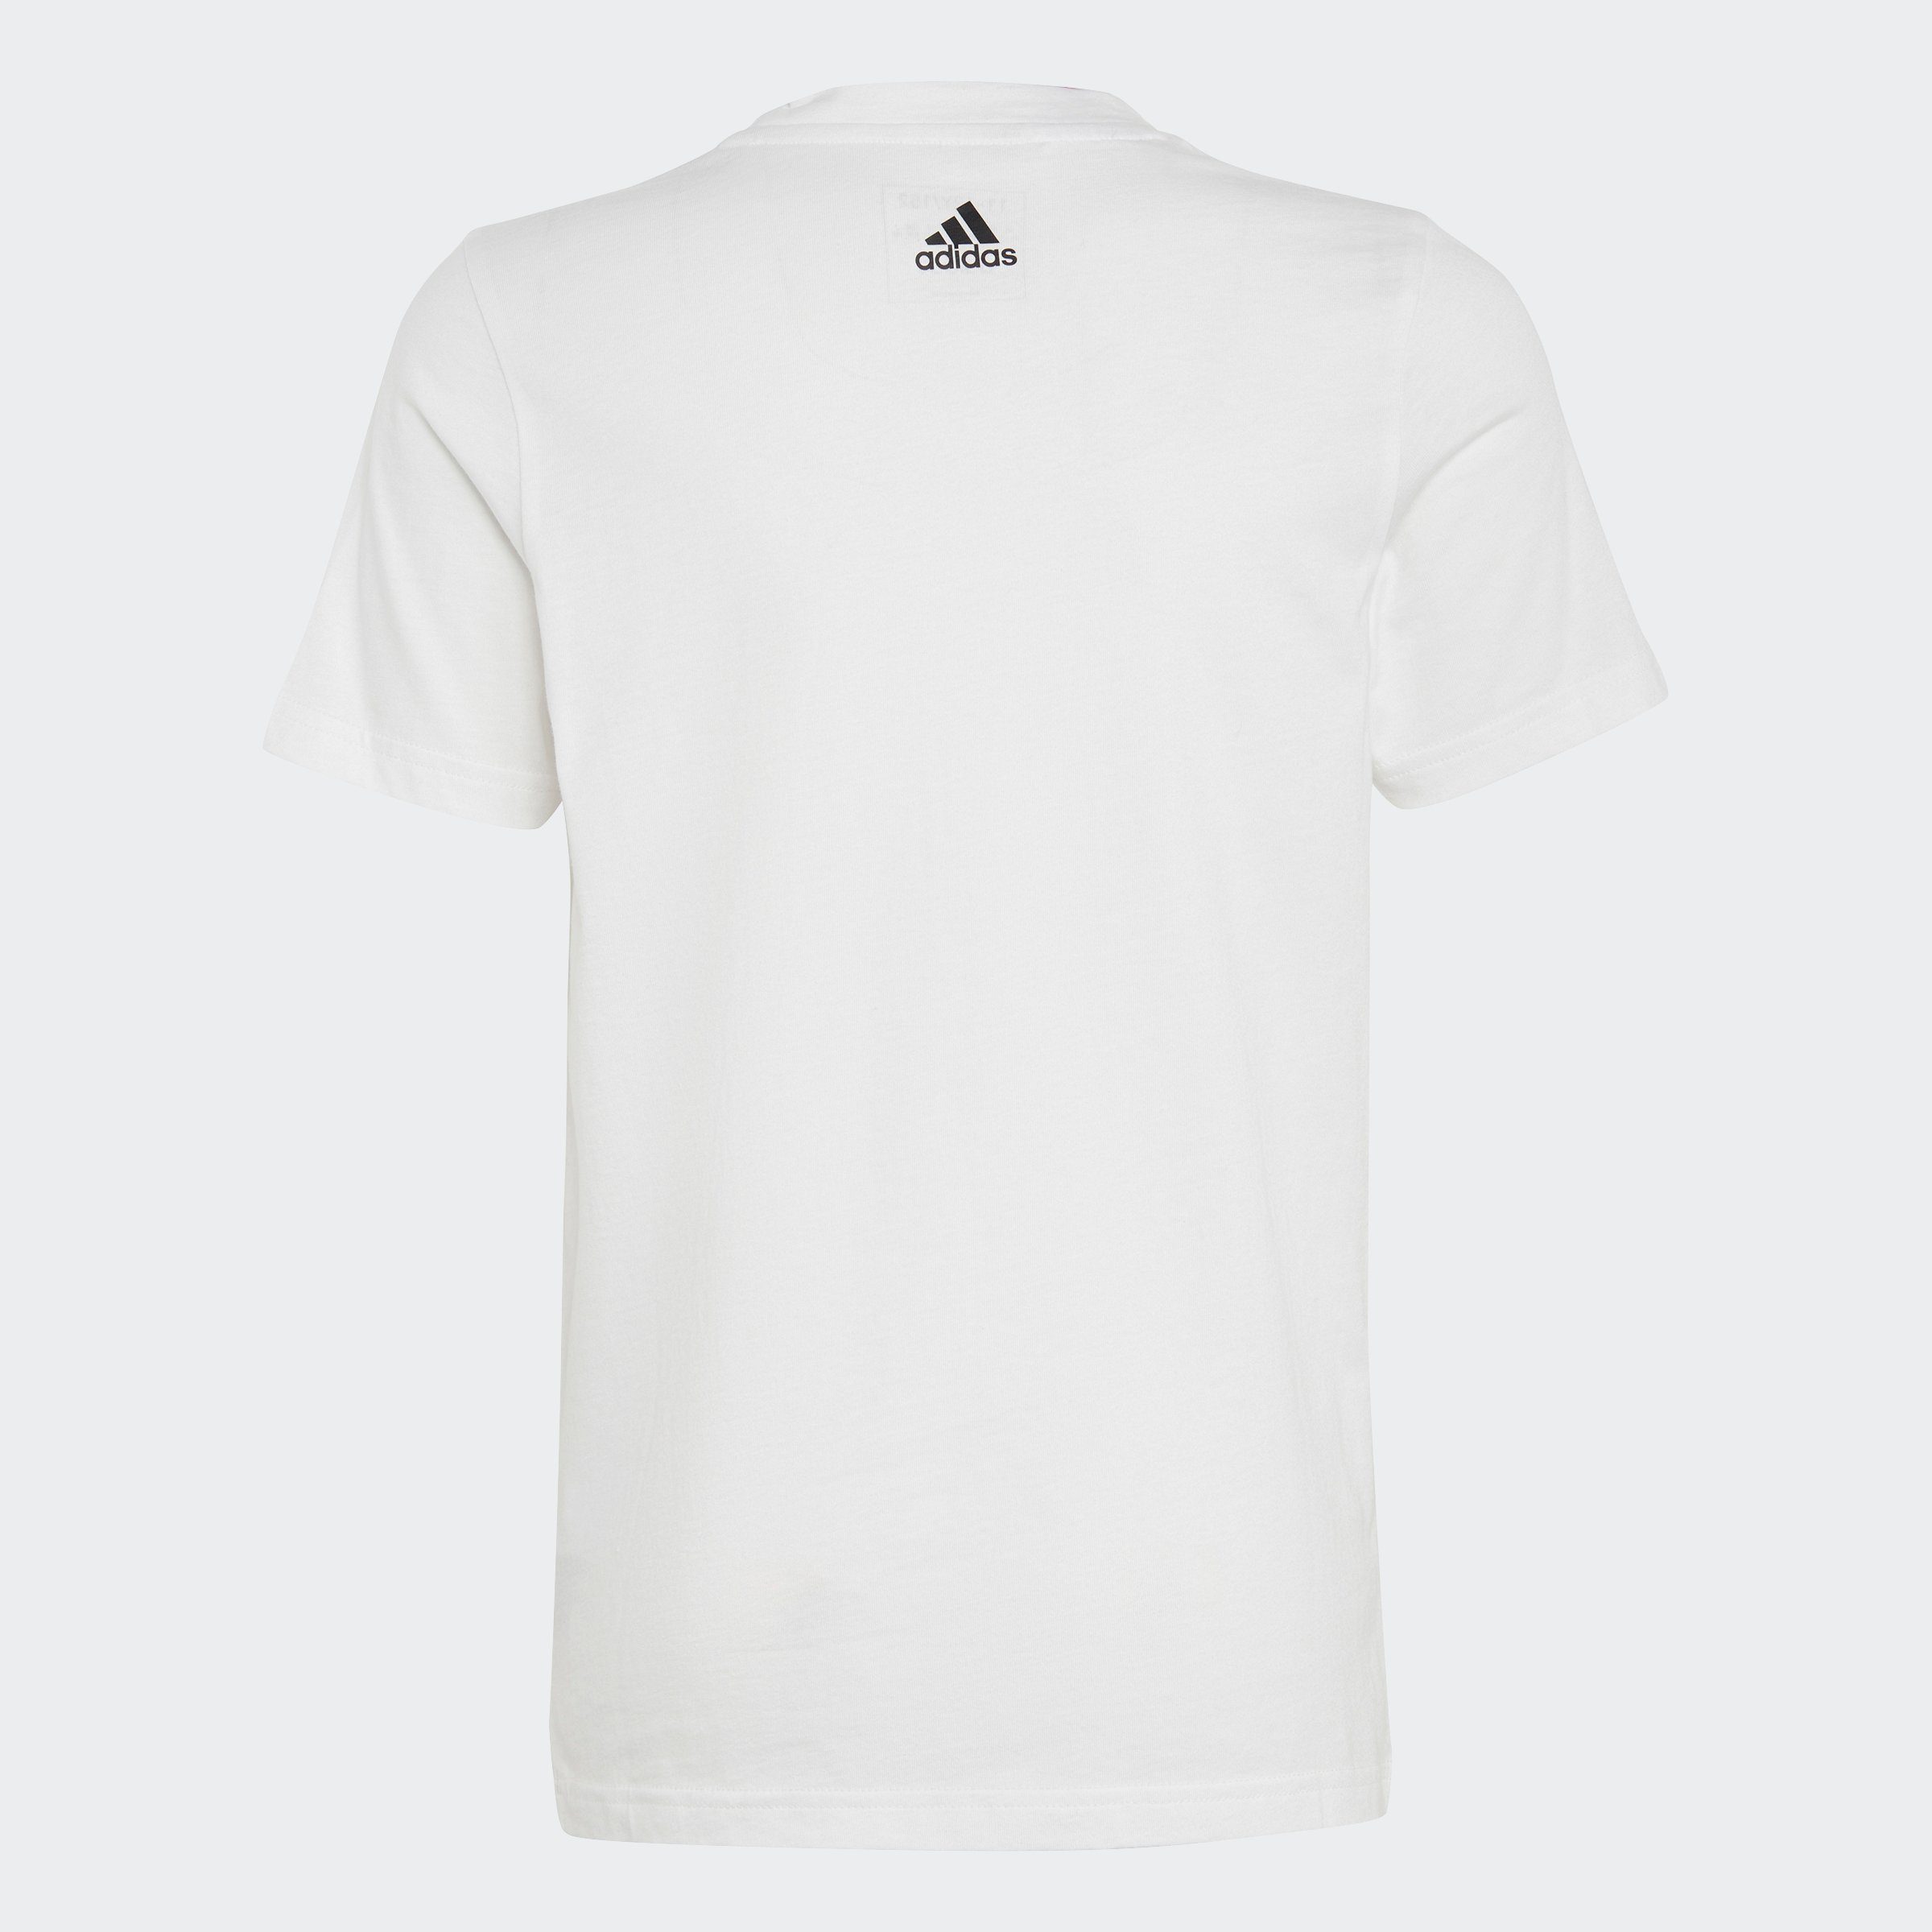 LINEAR COTTON White T-Shirt Sportswear LOGO adidas / Black ESSENTIALS